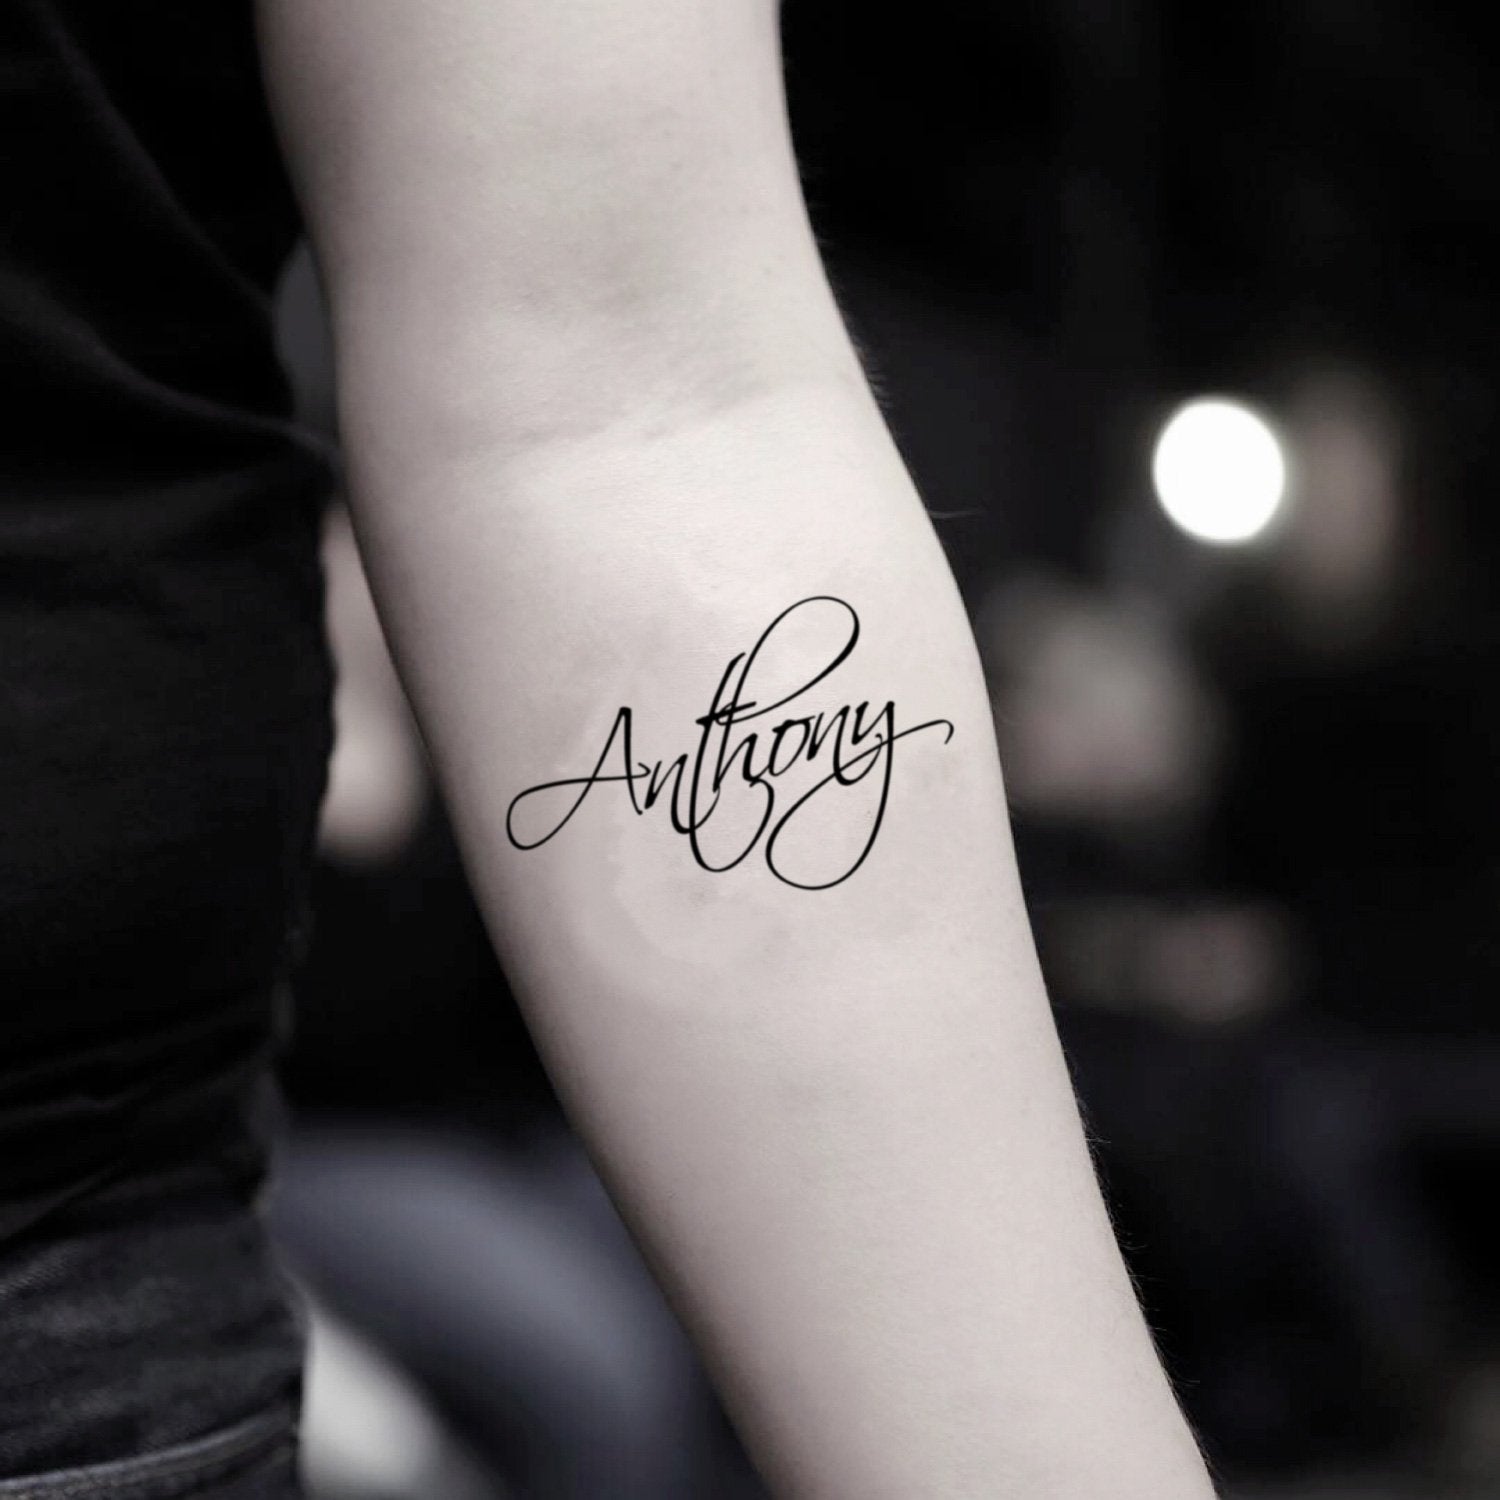 Anthony tattoo ideas